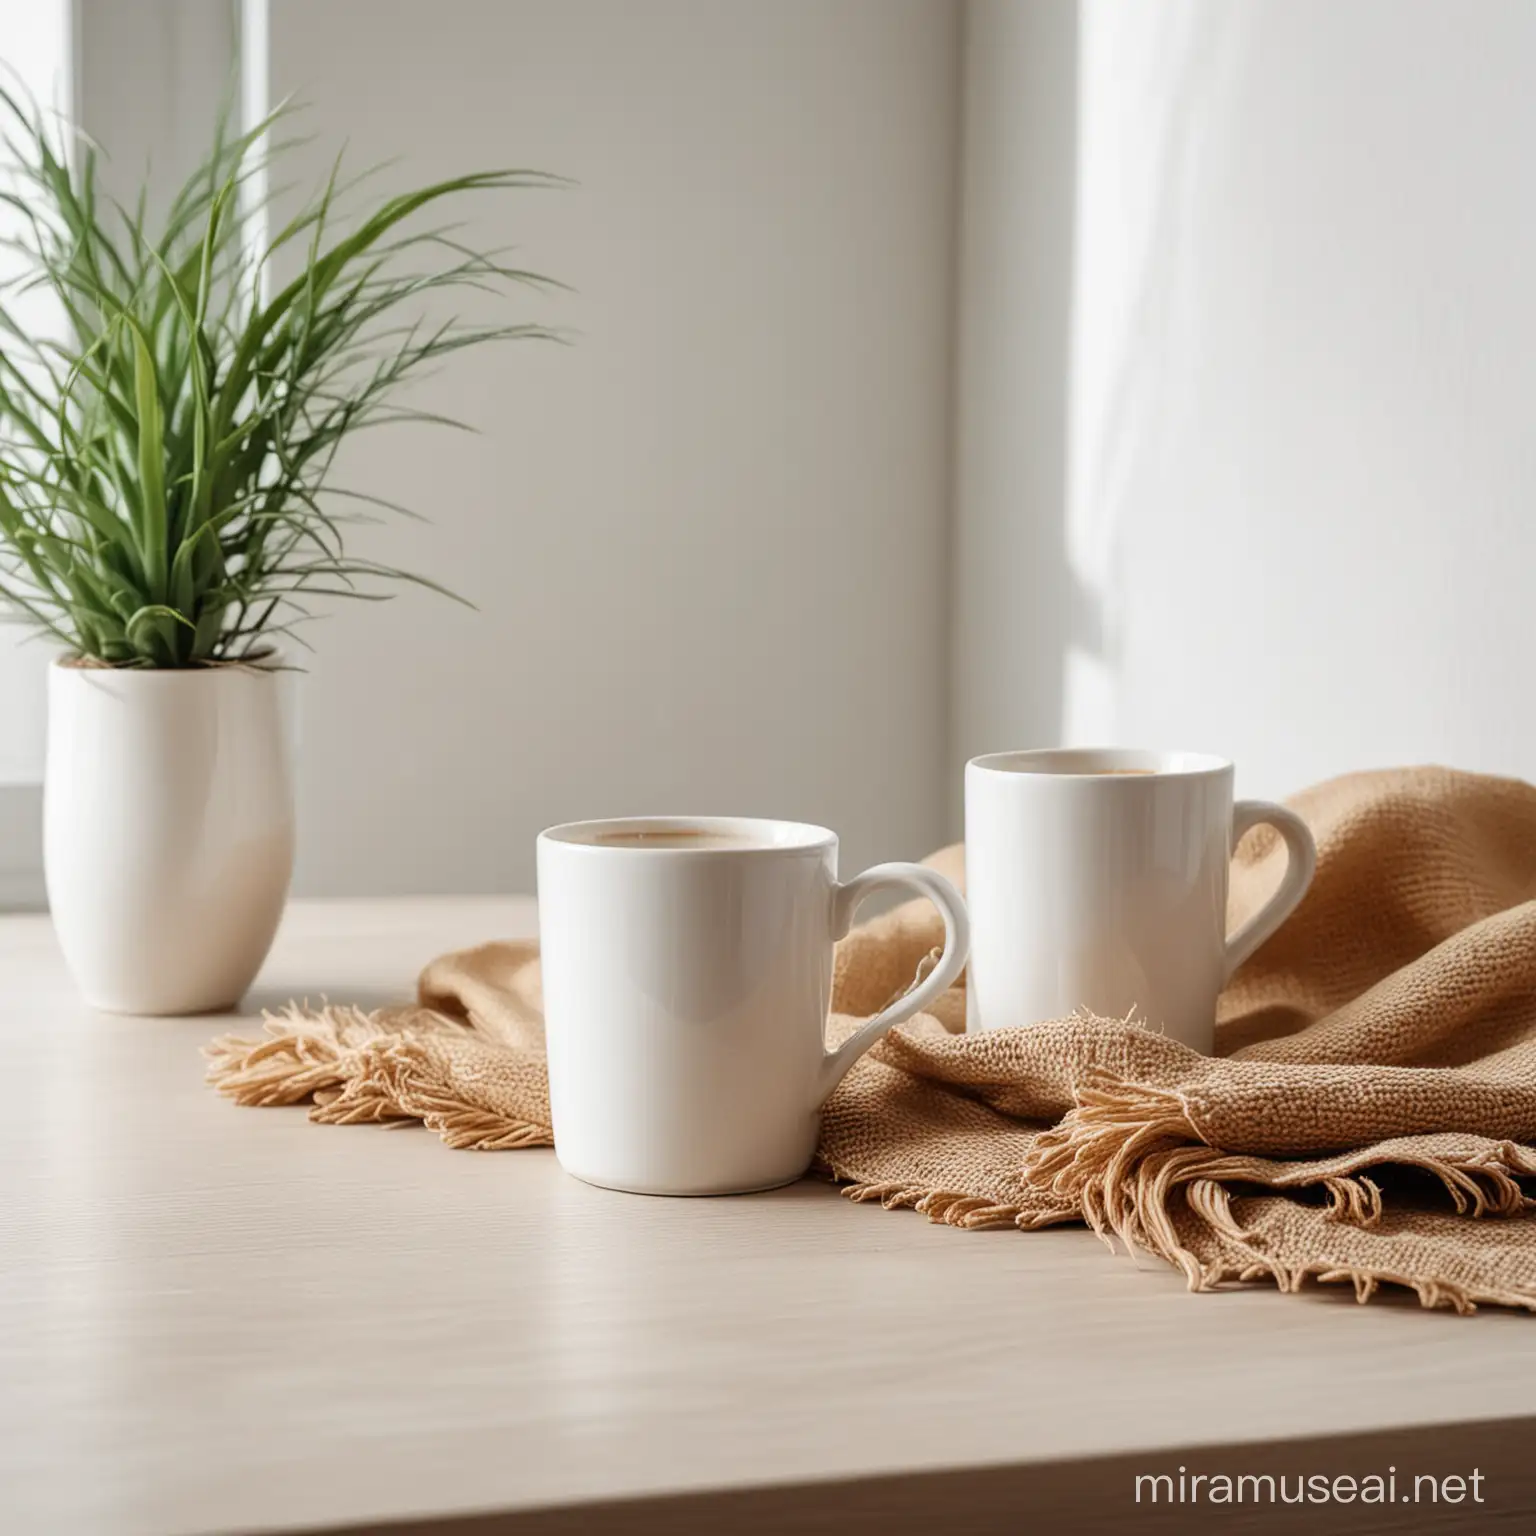 Summer Morning White Coffee Mug with Minimalist Decor